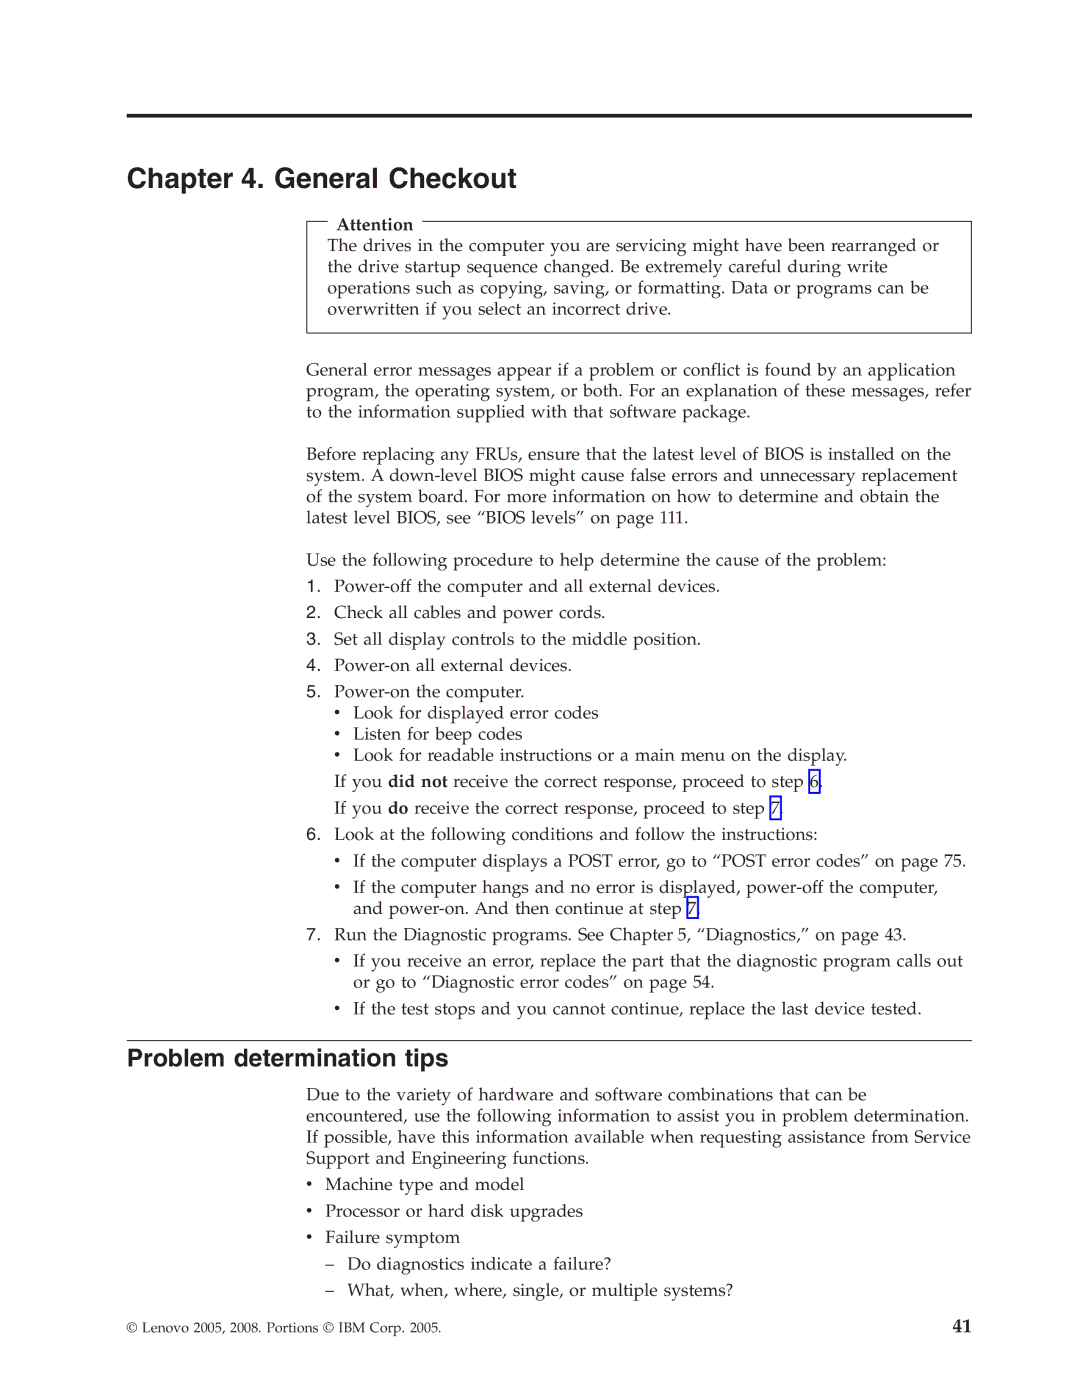 Lenovo E200 manual General Checkout, Problem determination tips 